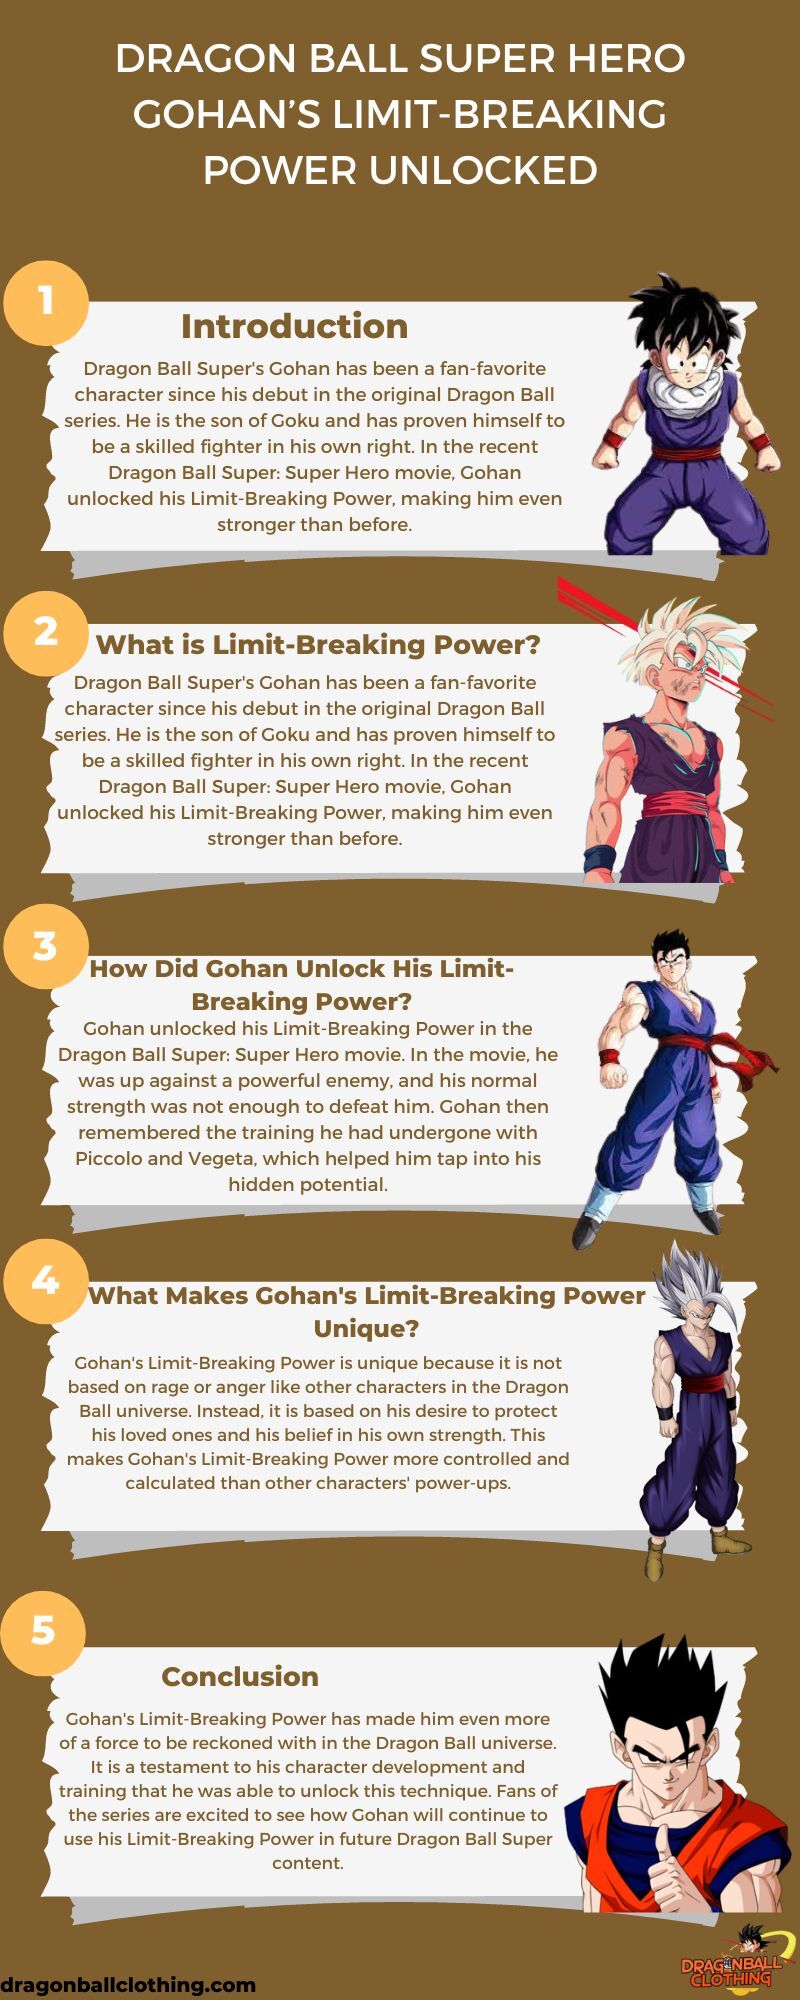 Dragon Ball Super Hero Gohan's Limit-Breaking Power Unlocked